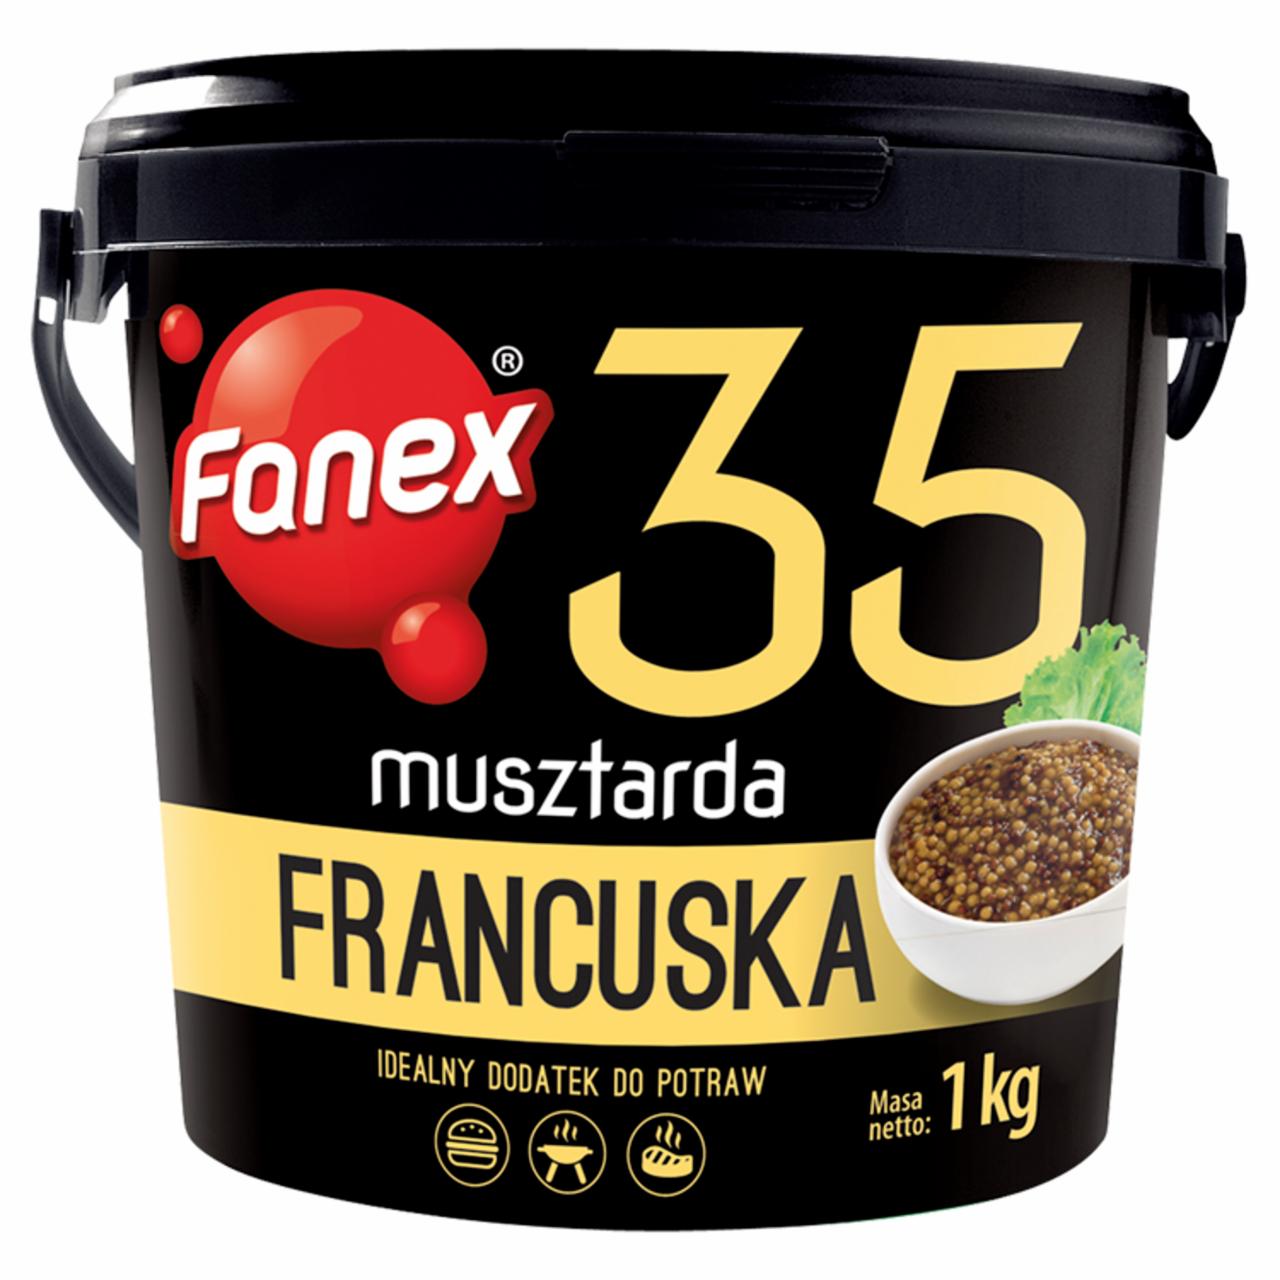 Zdjęcia - Fanex Musztarda francuska 1 kg